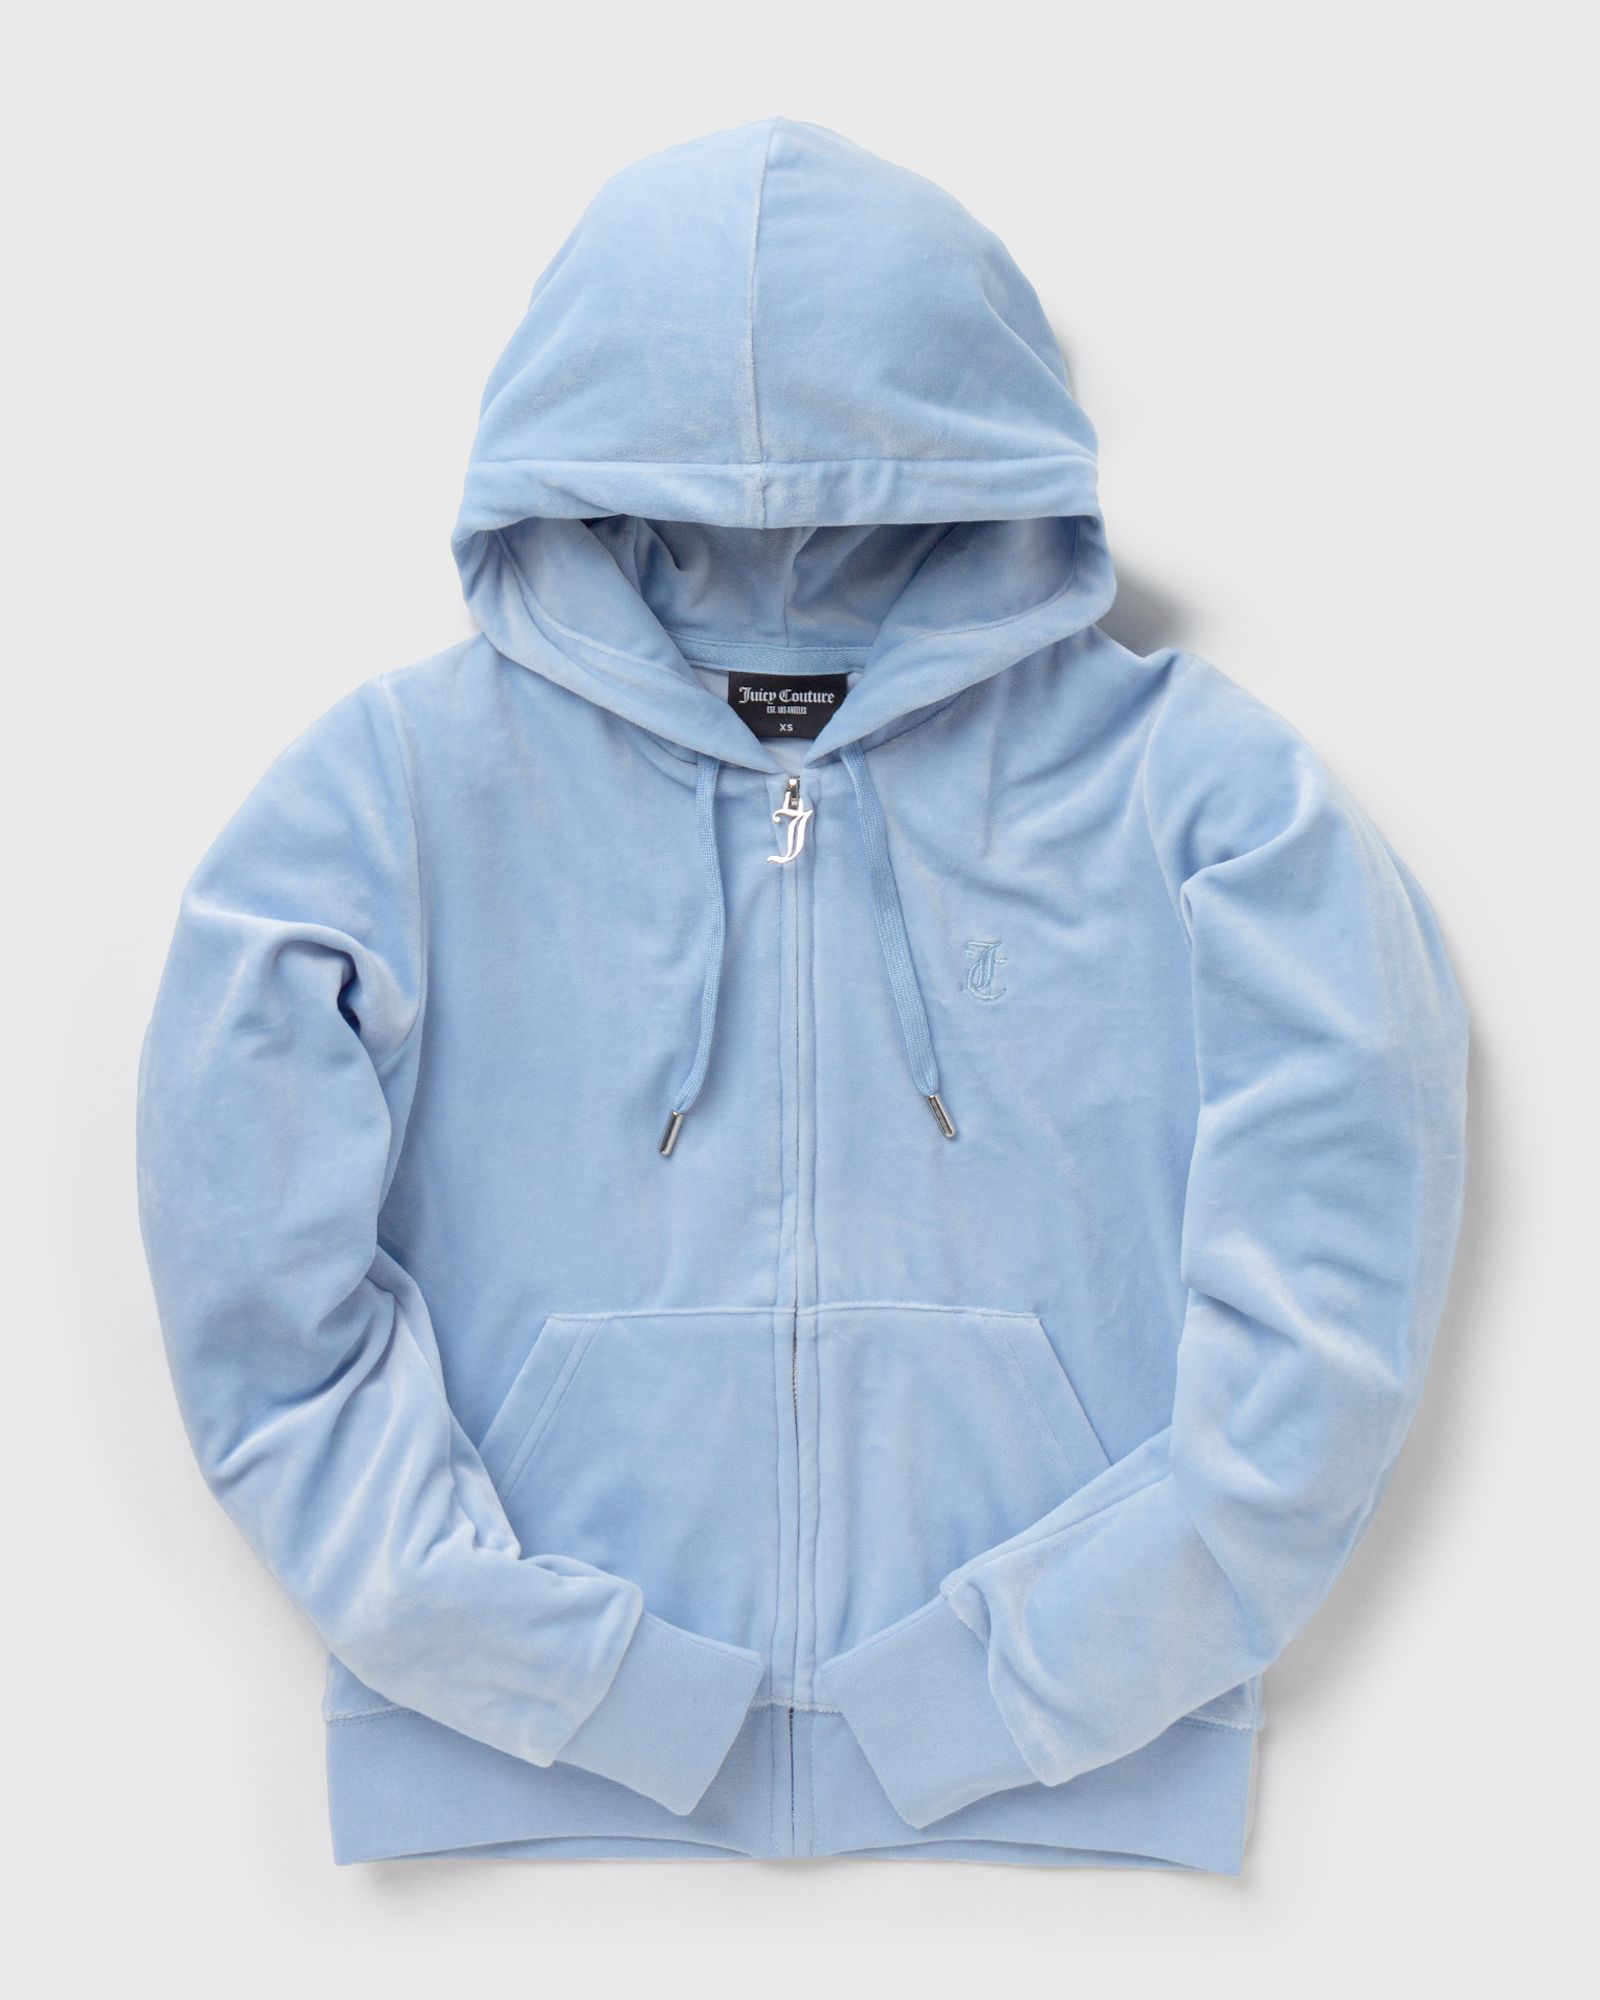 Juicy Couture - classic velour robertson zip hoodie women track jackets|zippers blue in größe:s